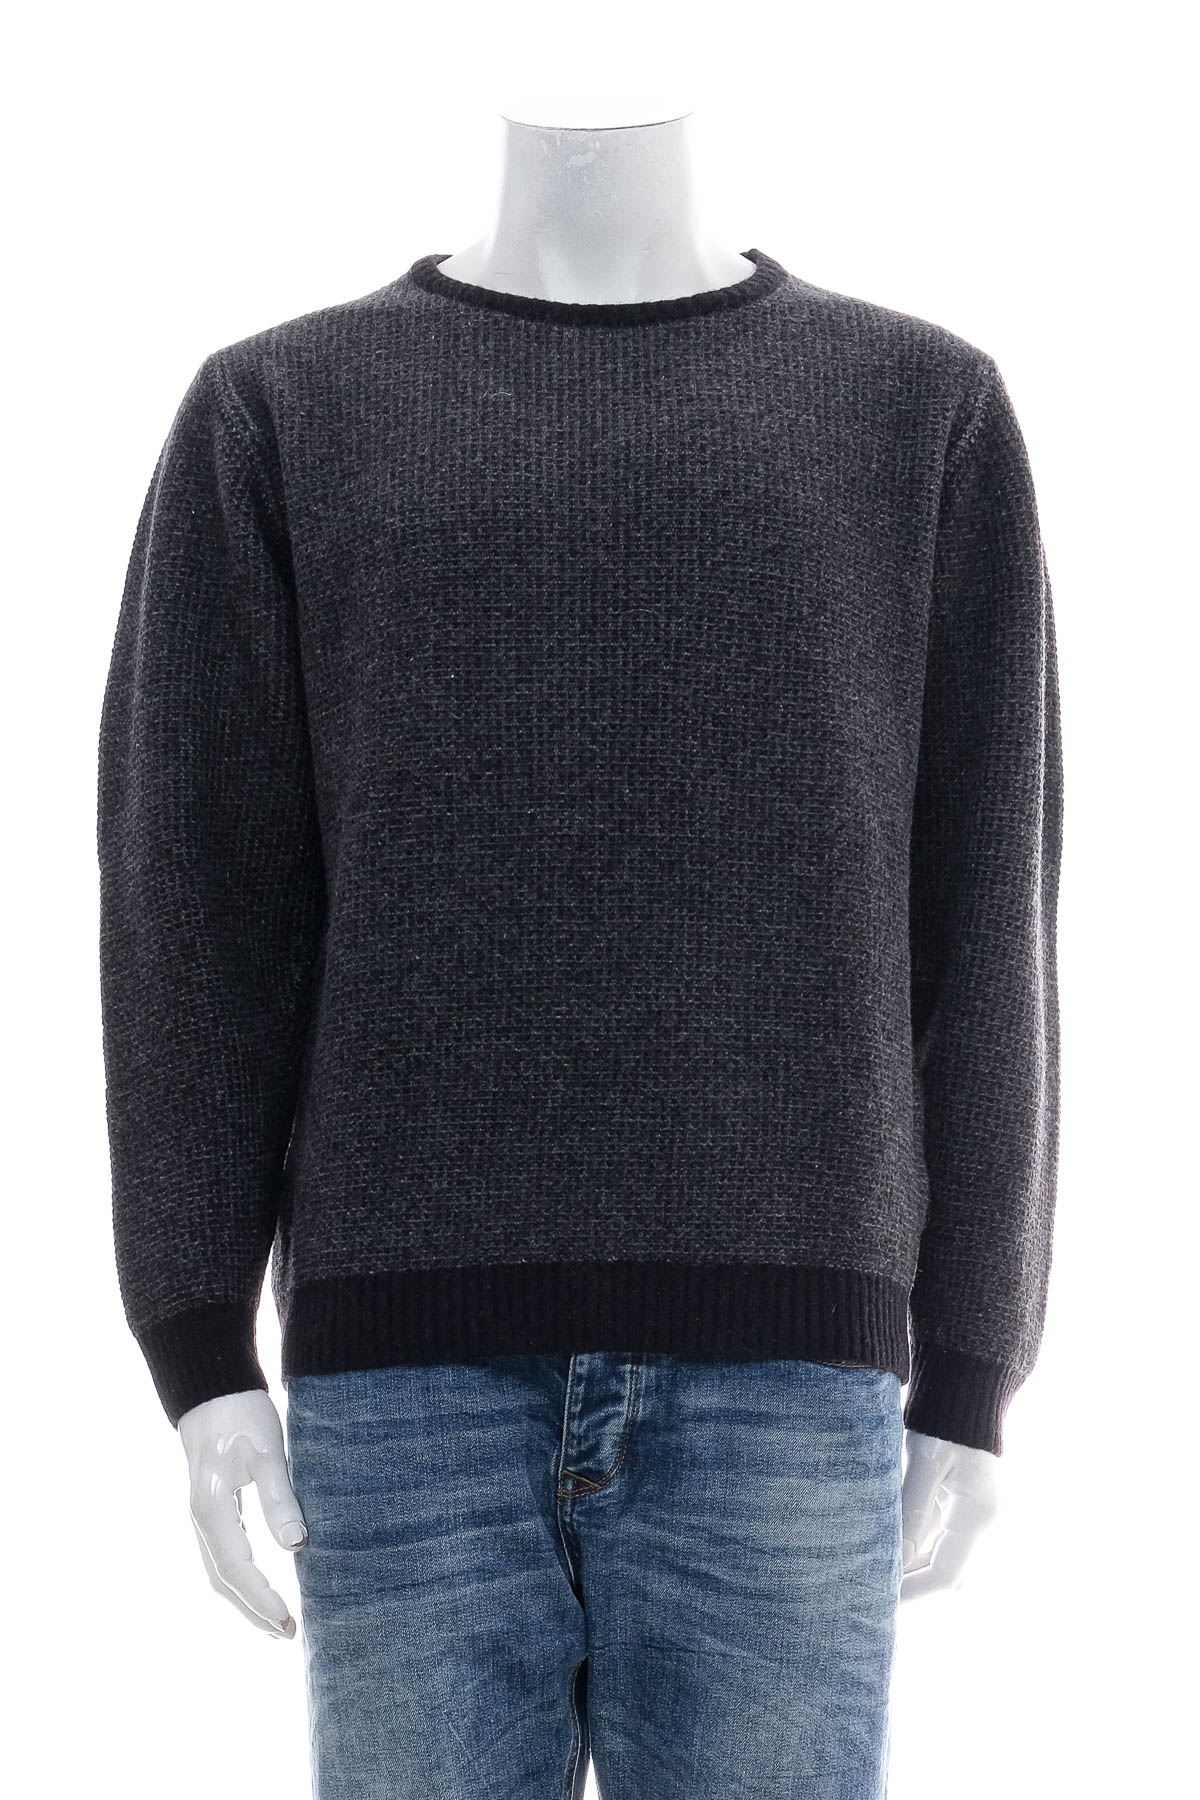 Men's sweater - Kitaro - 0